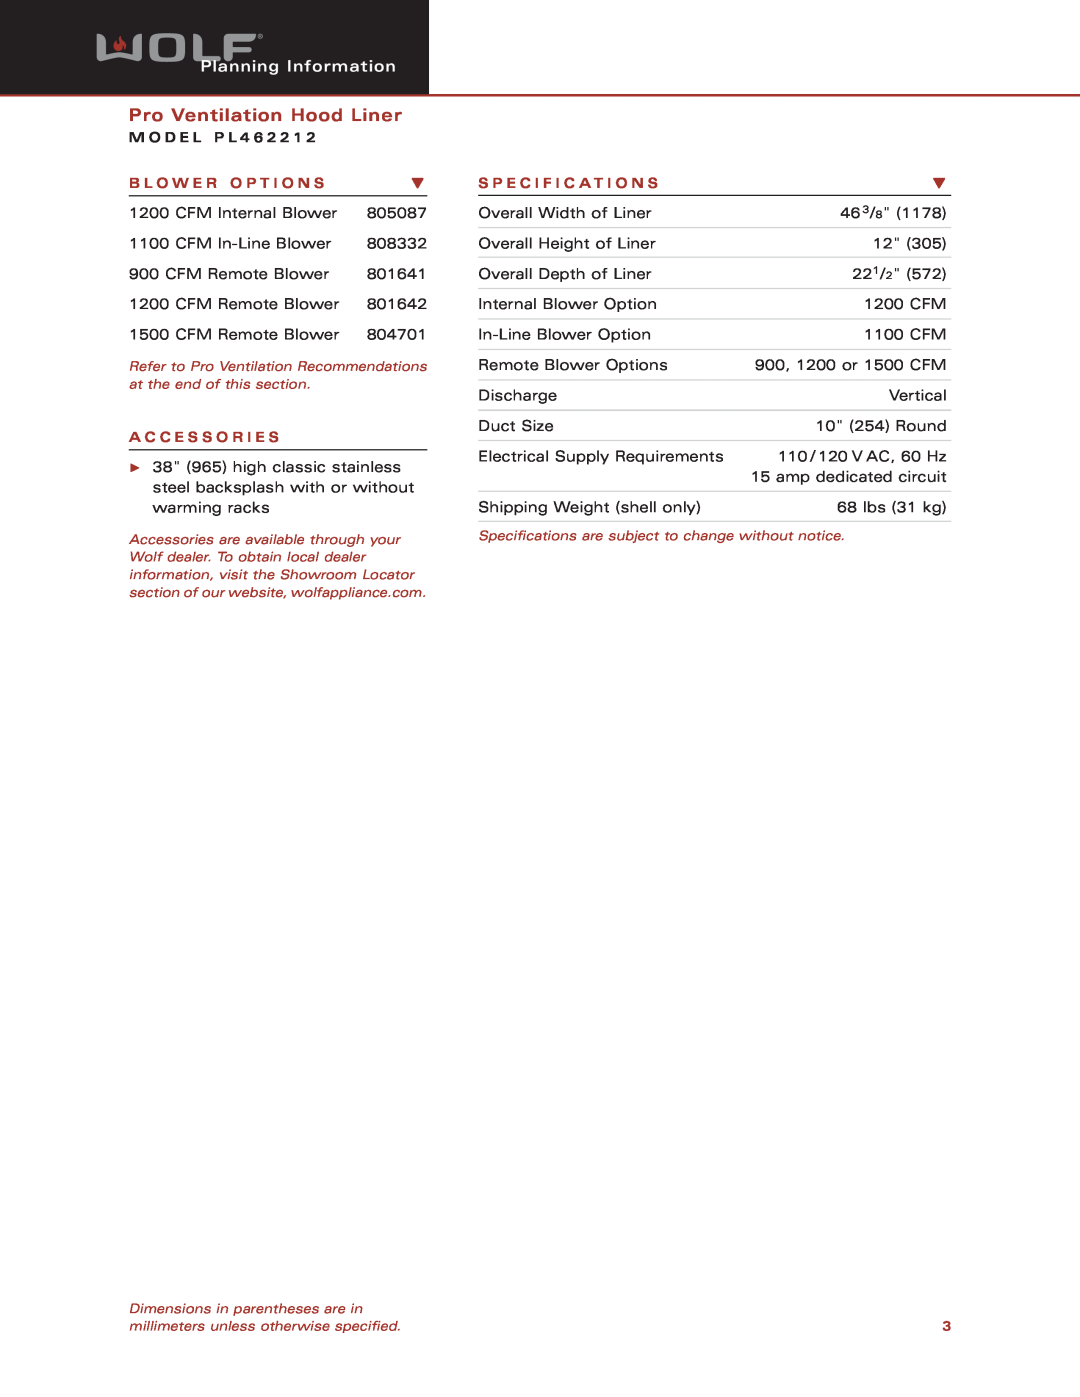 Wolf Appliance Company PL462212 Pro Ventilation Hood Liner, Planning Information, M O D E L P L 4 6, A C C E S S O R I E S 